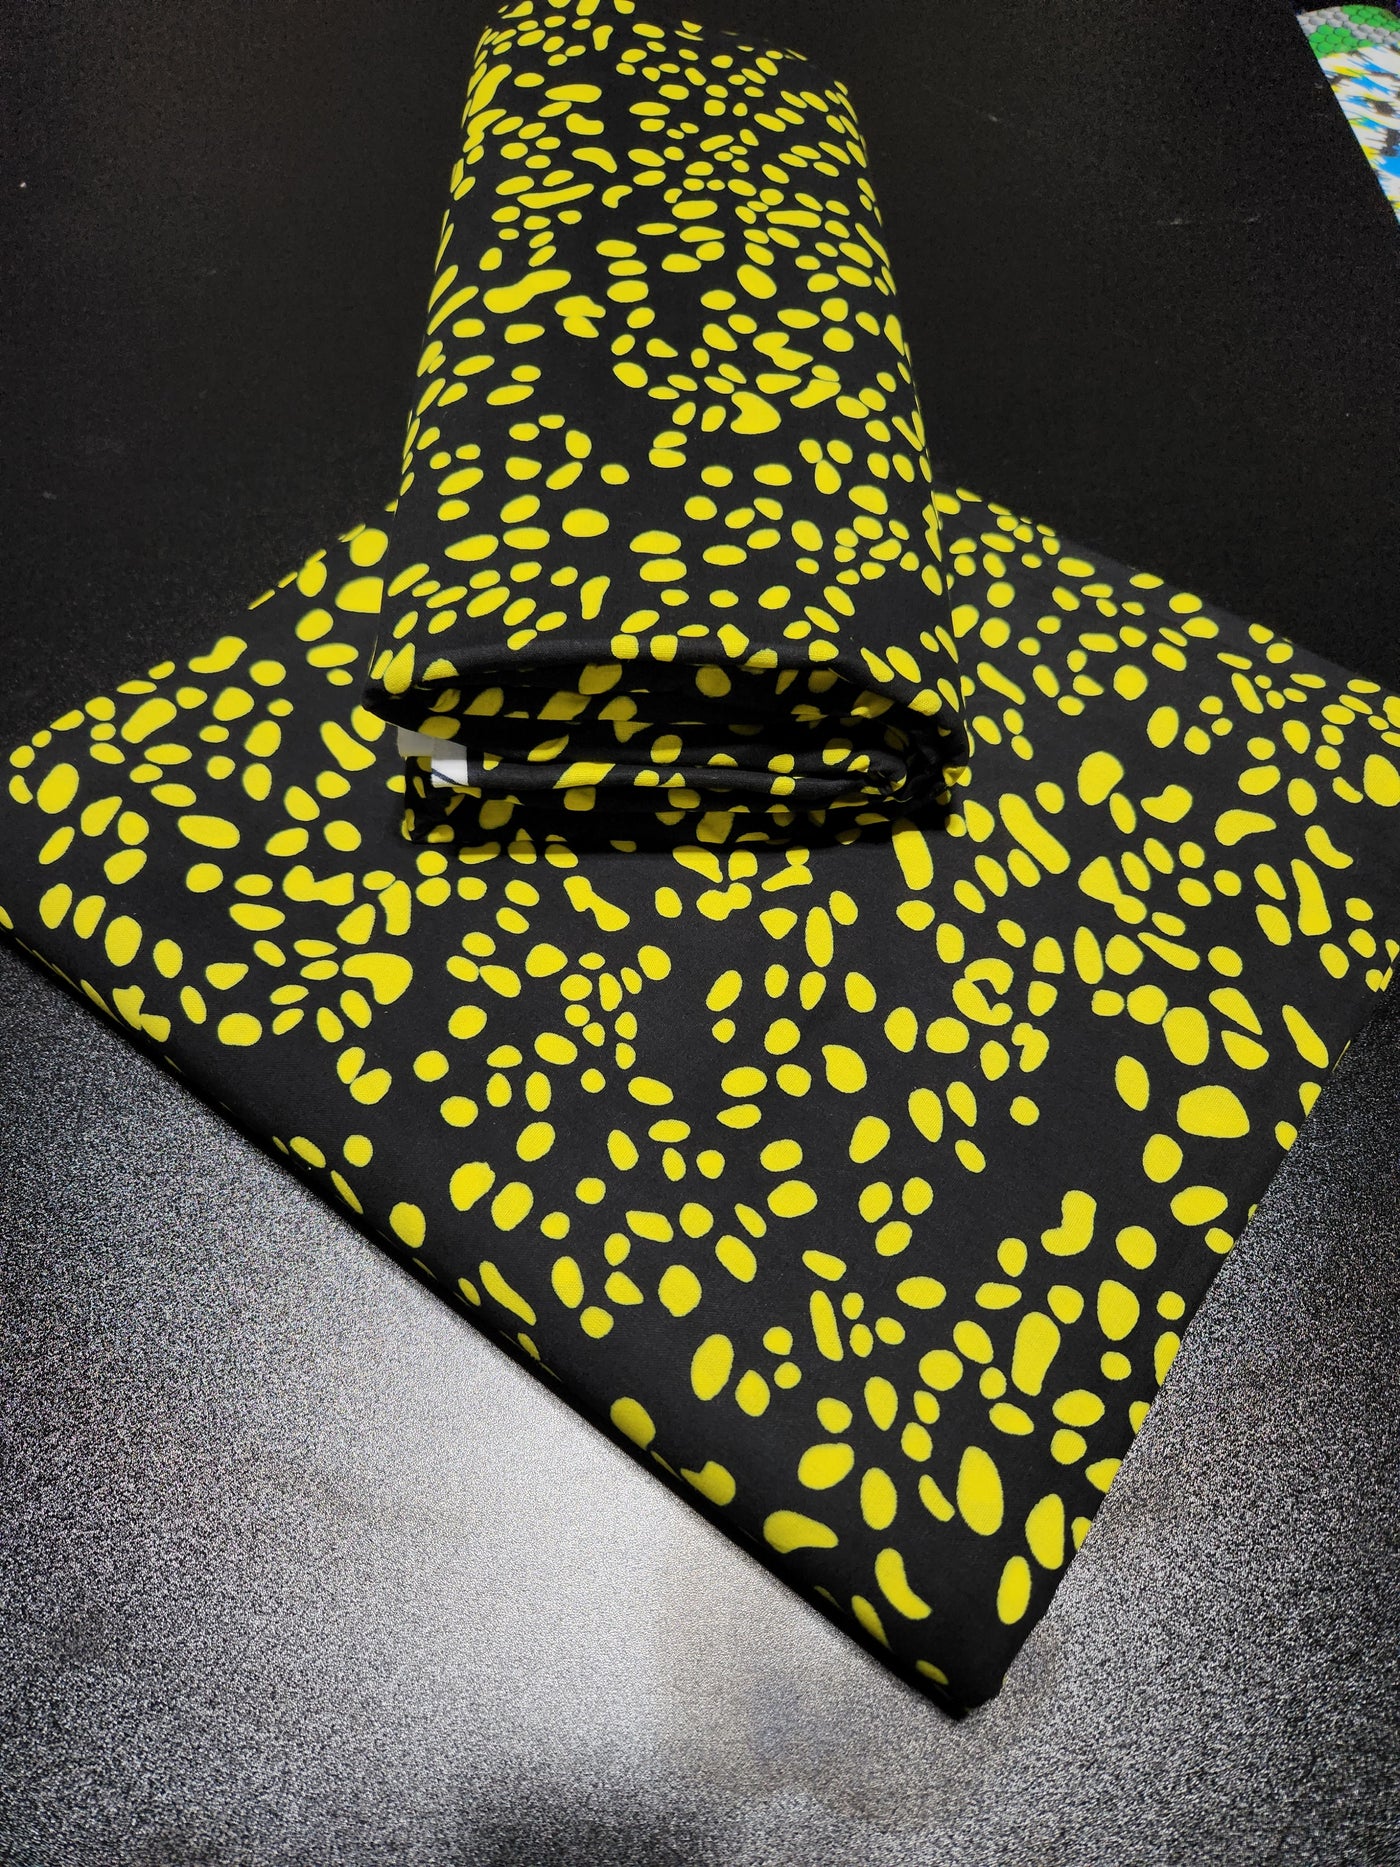 Black and Yellow Ankara Print Fabric